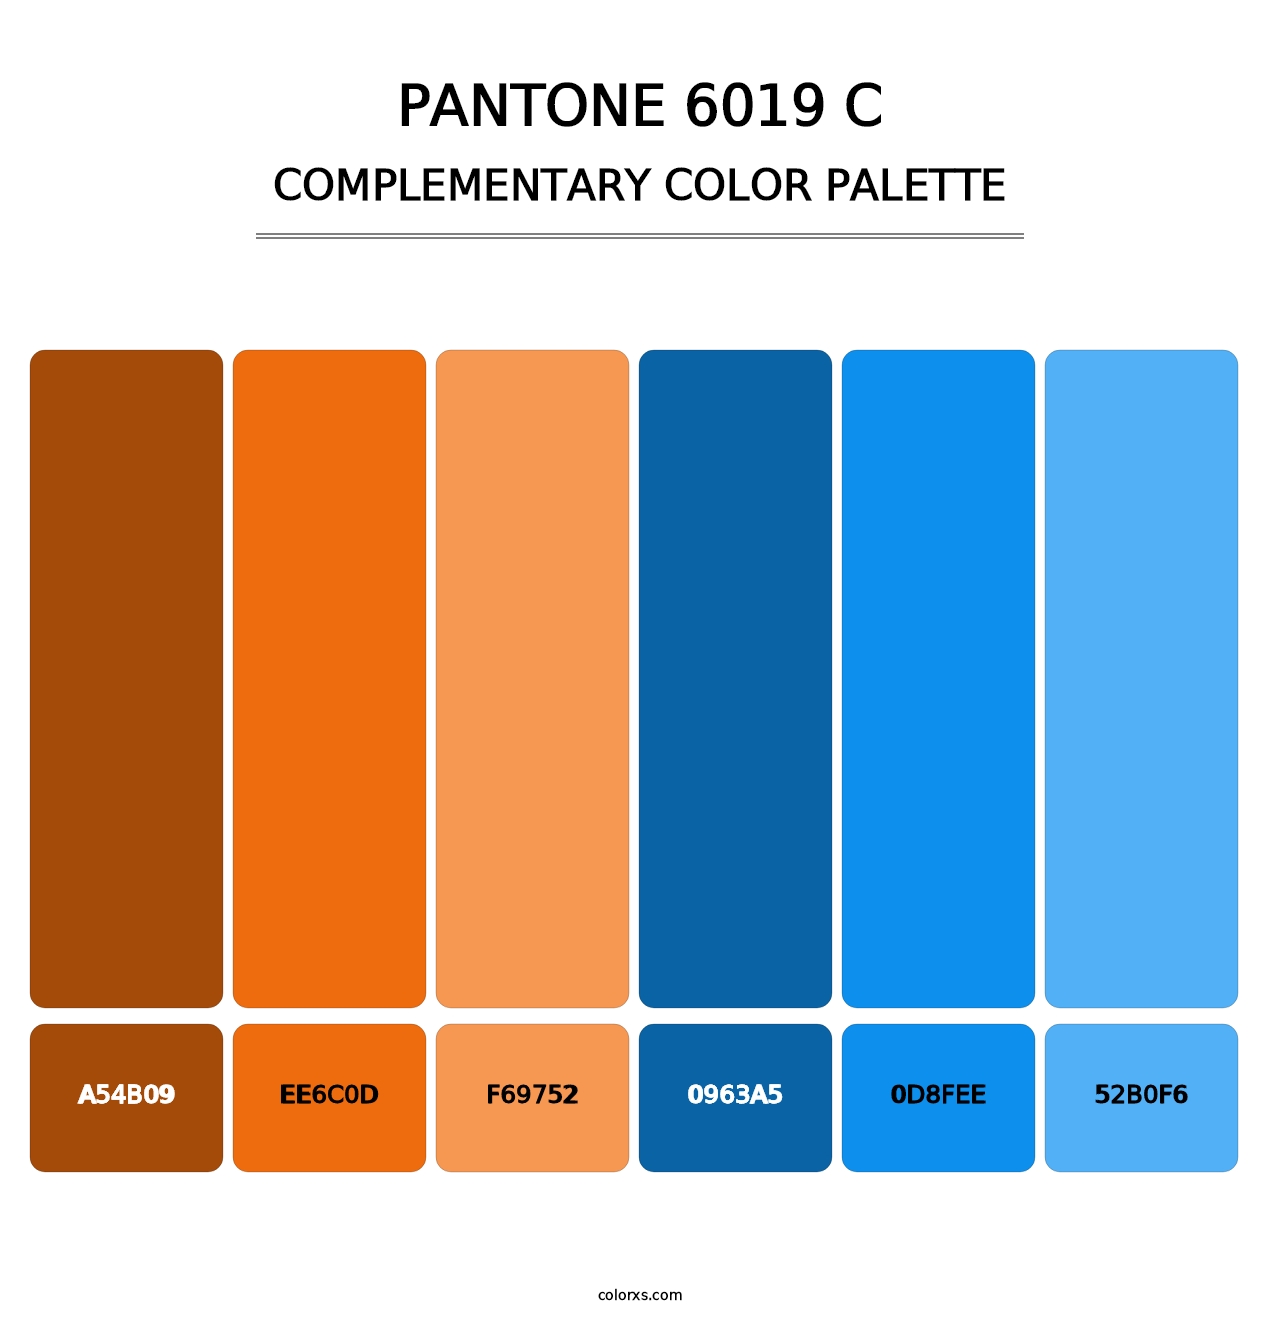 PANTONE 6019 C - Complementary Color Palette